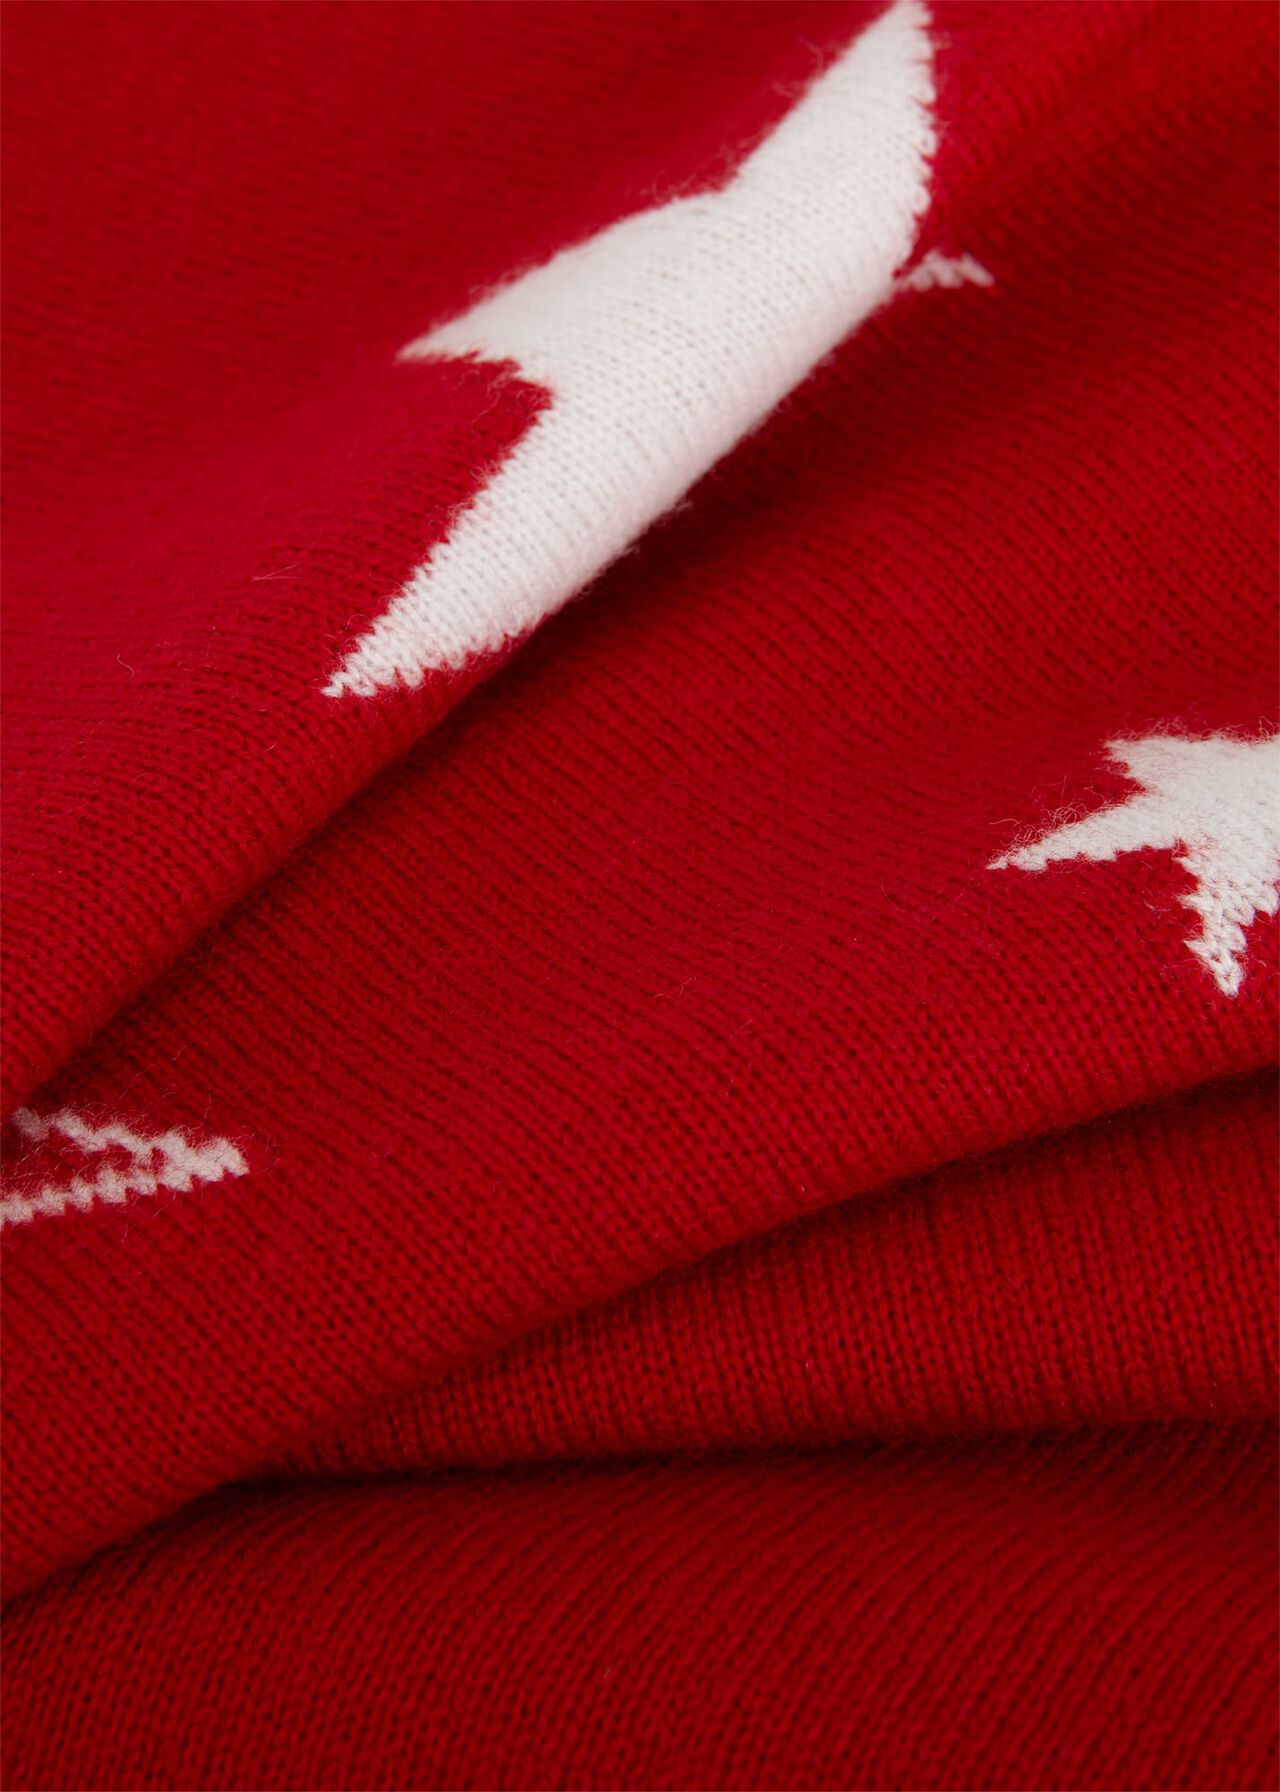 Samira Wool Cashmere Star Sweater, Red Ivory, hi-res